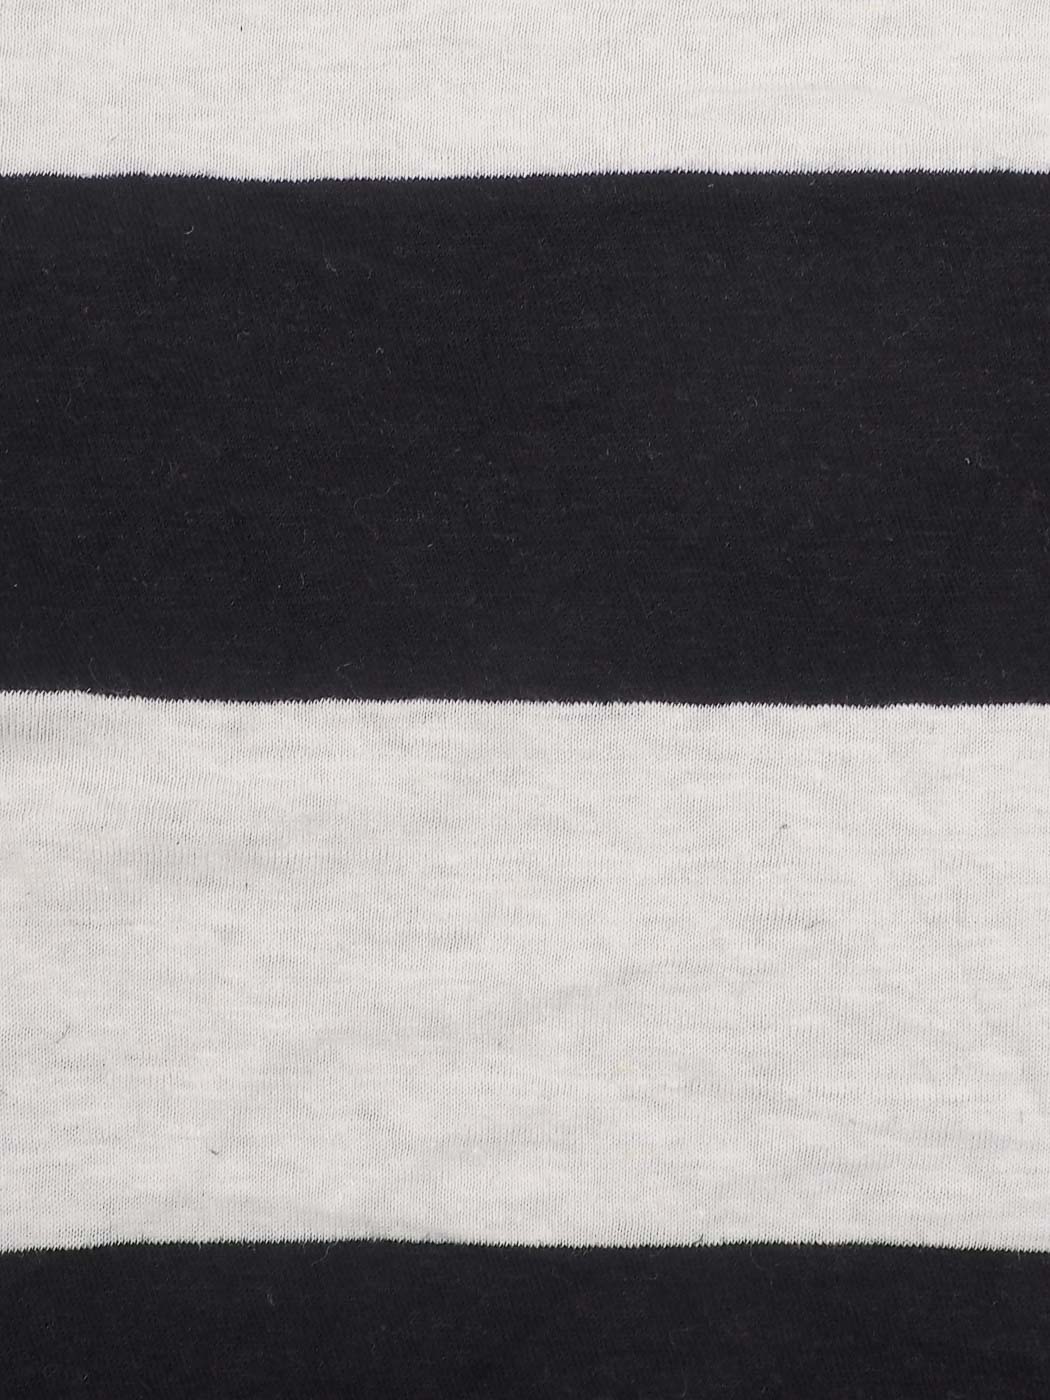 STRIPE JESRSEY HEMP BLEND | Black/Natural White Wide